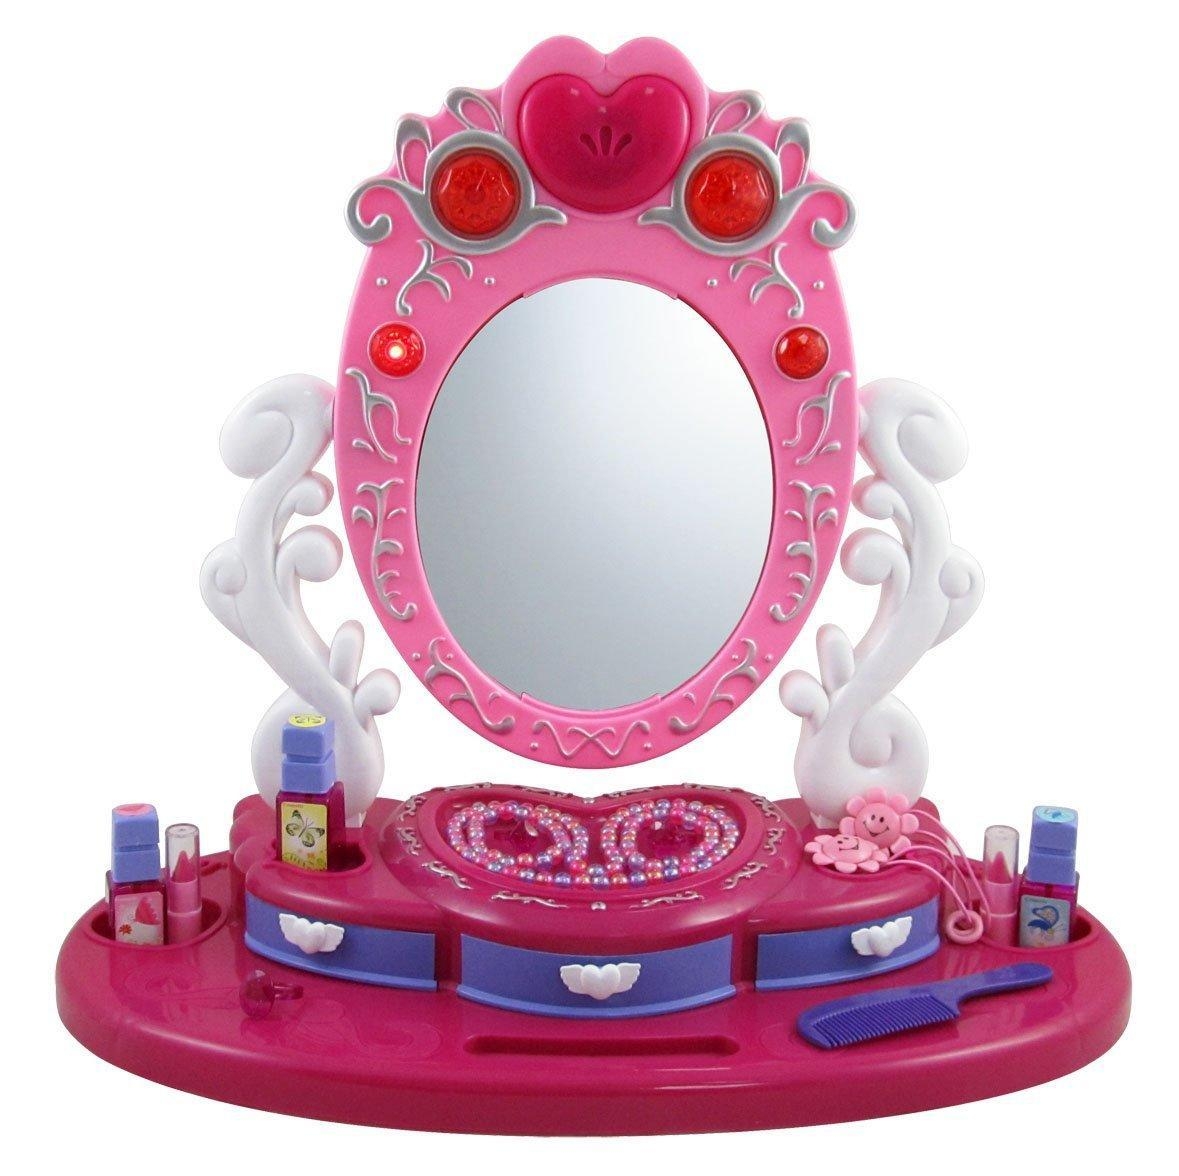 Dresser Mirror Vanity Beauty Set with Jewelry for Kids